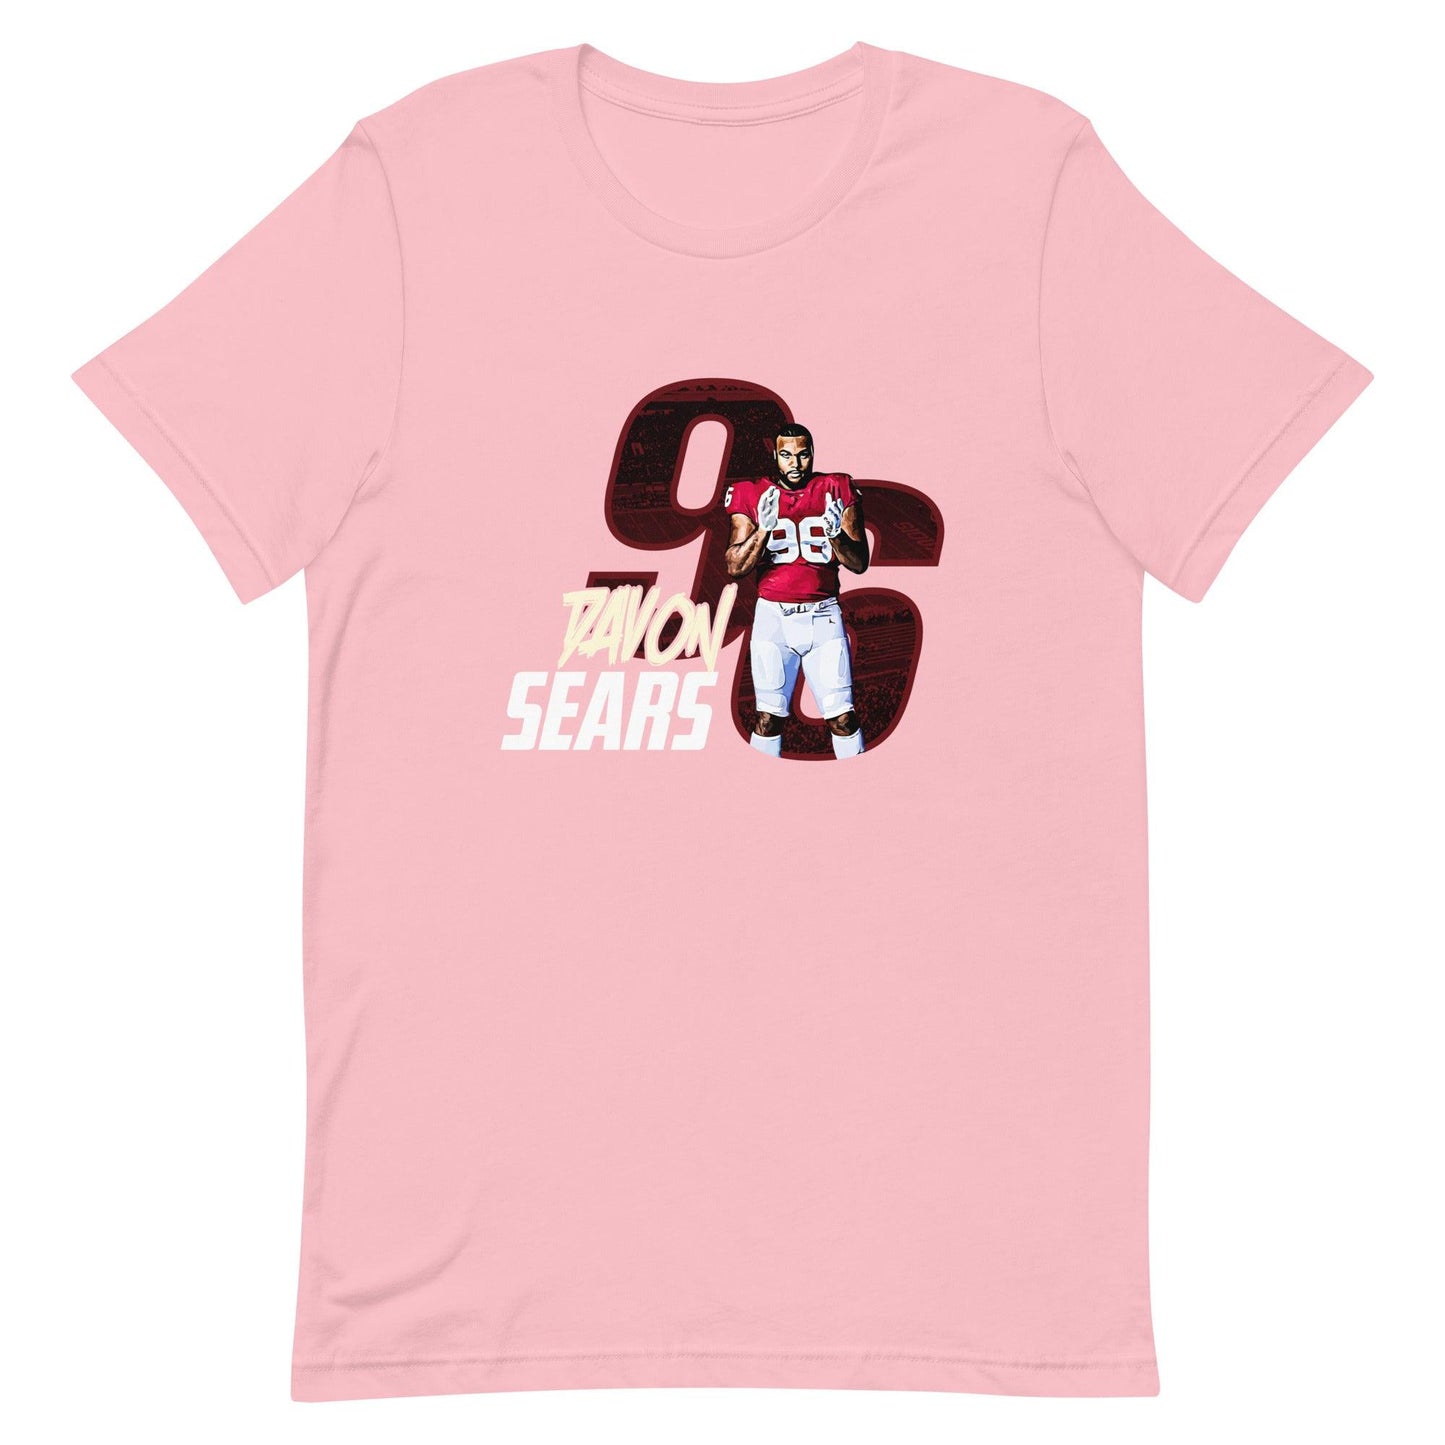 Davon Sears "Gameday" t-shirt - Fan Arch